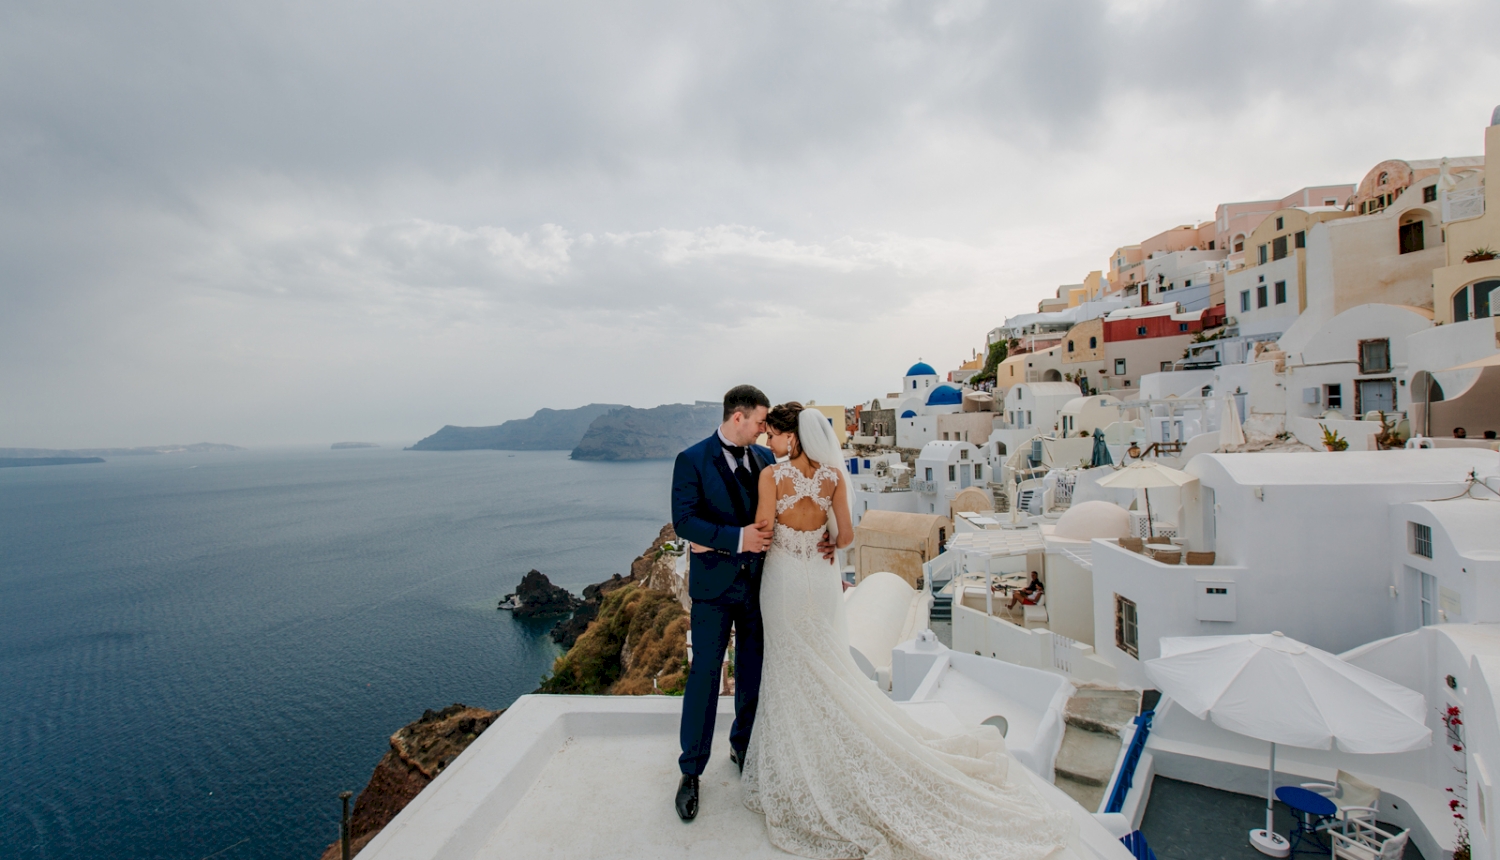 Julia and Maxim. Wedding photos on Santorini island in Greece ...